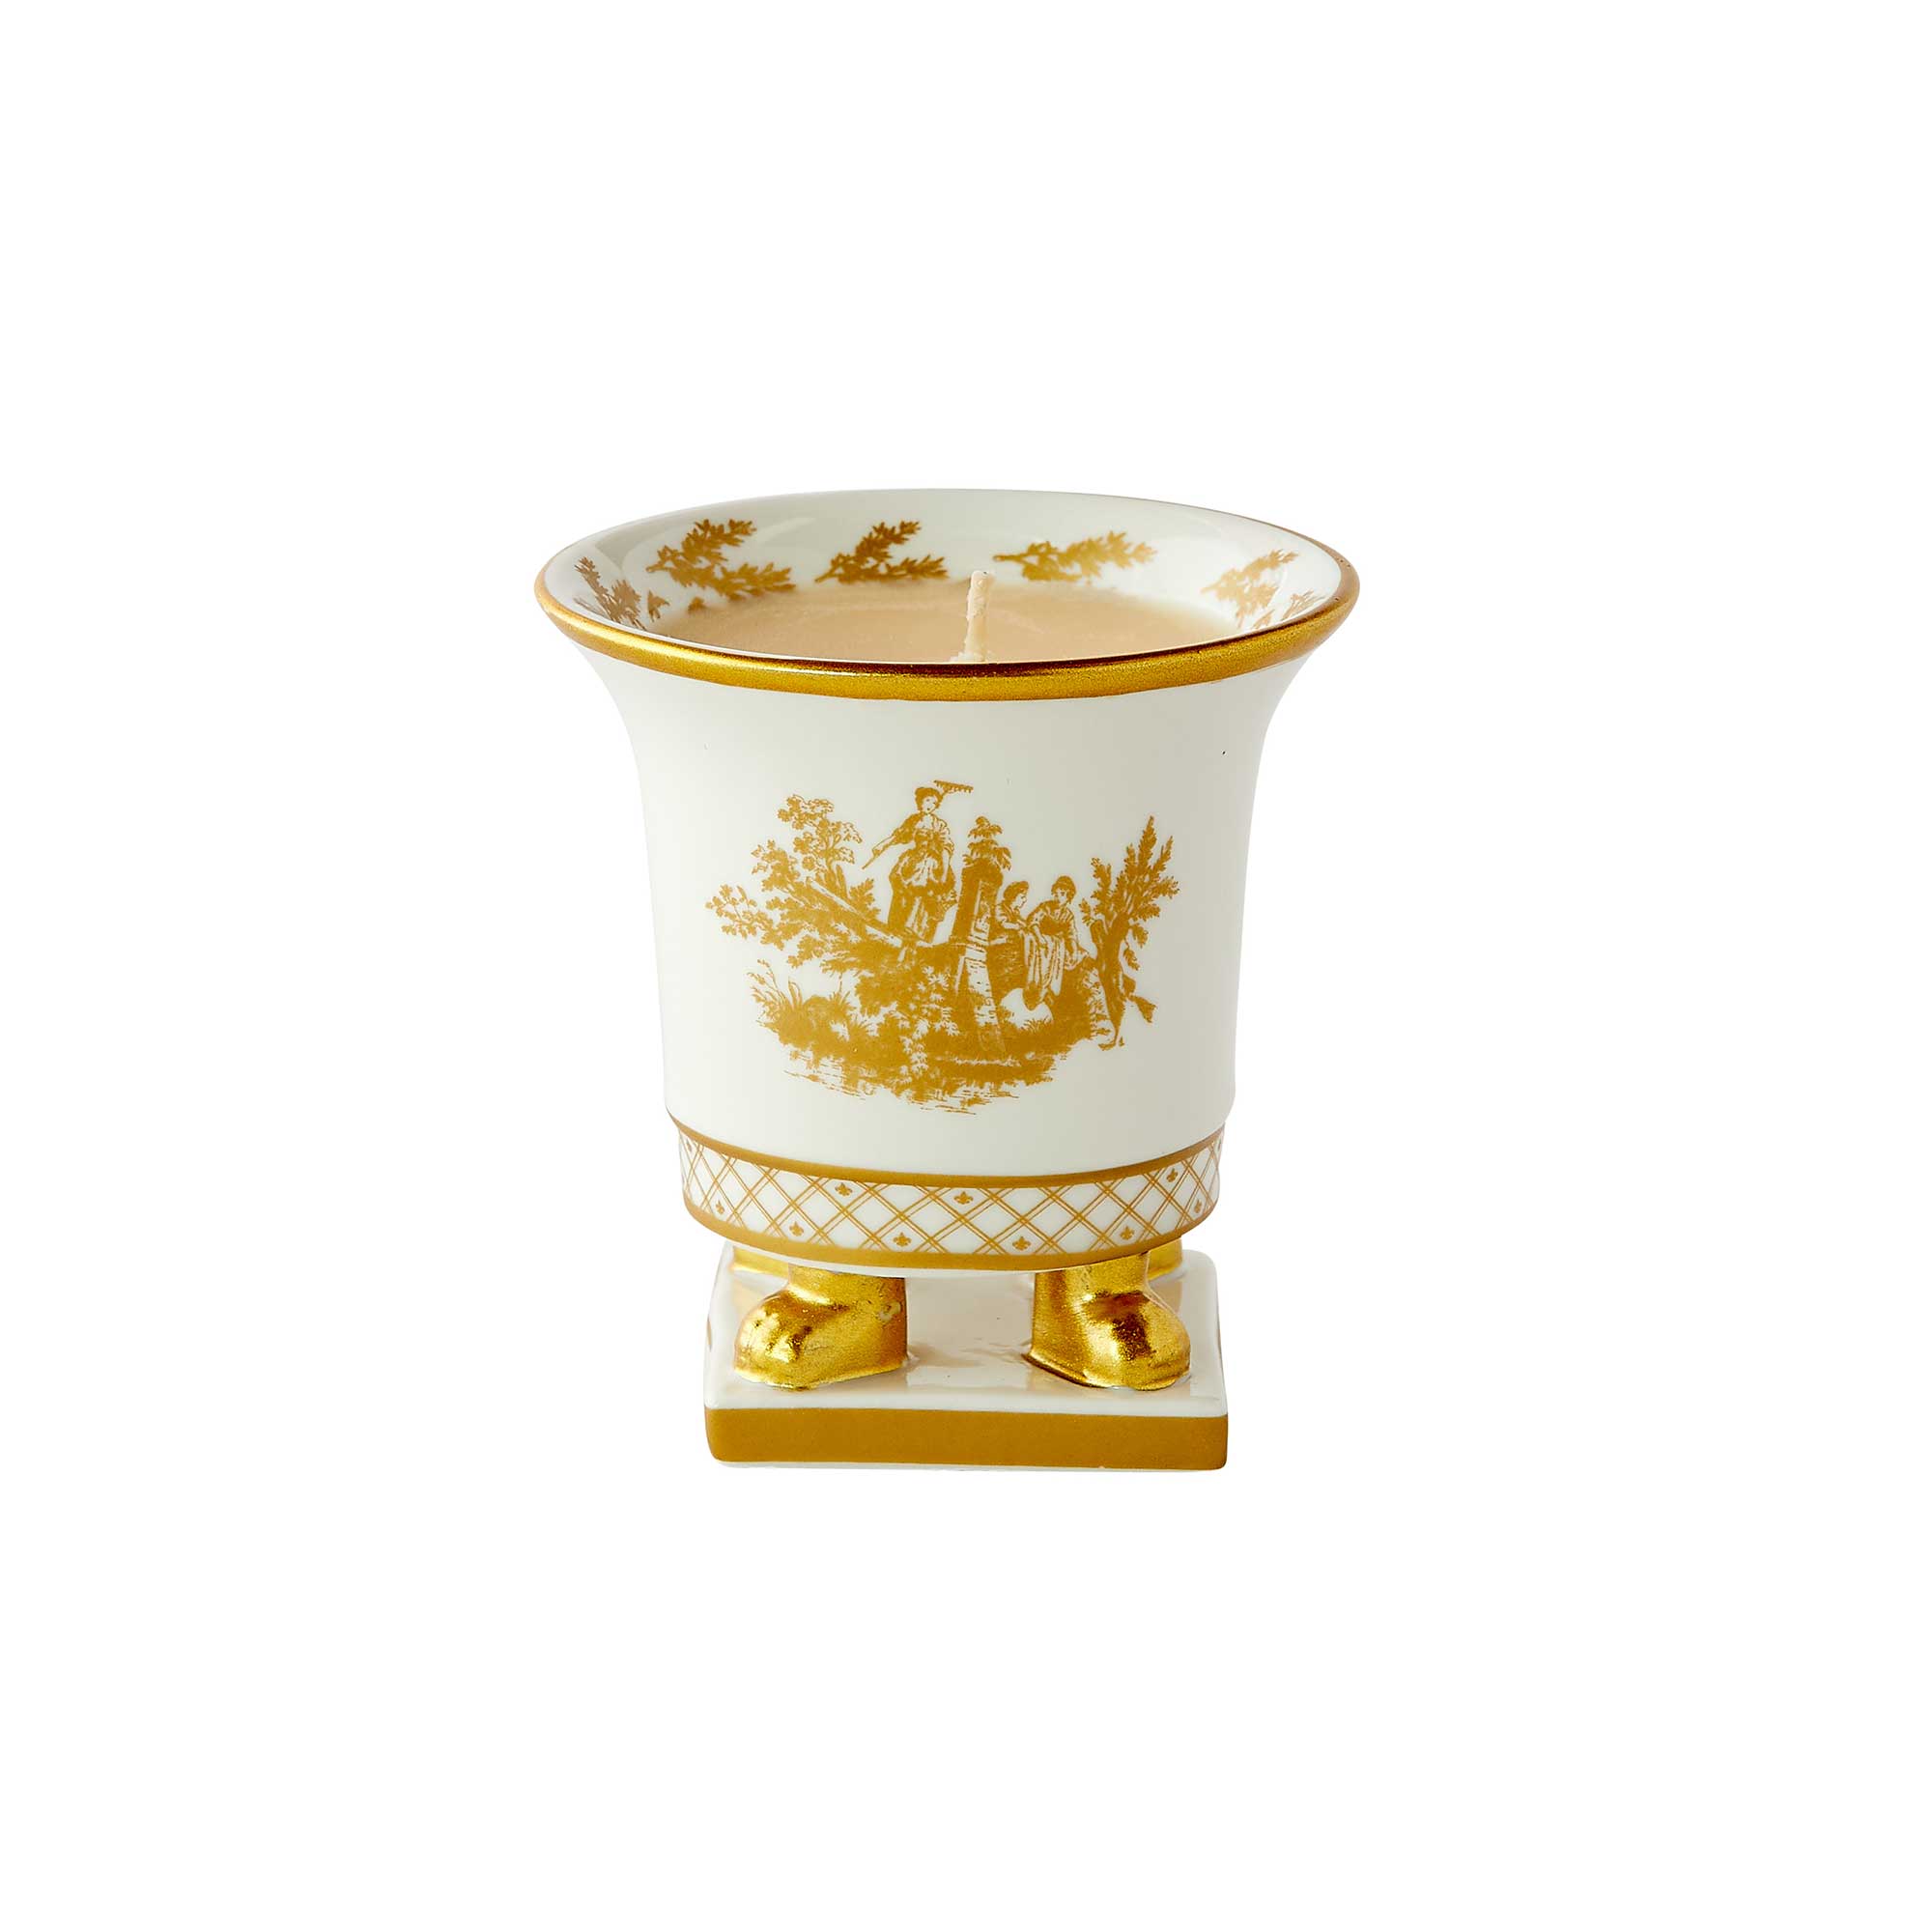 Fleurs de St. Germain Classic Toile Petite Ceramic Candle